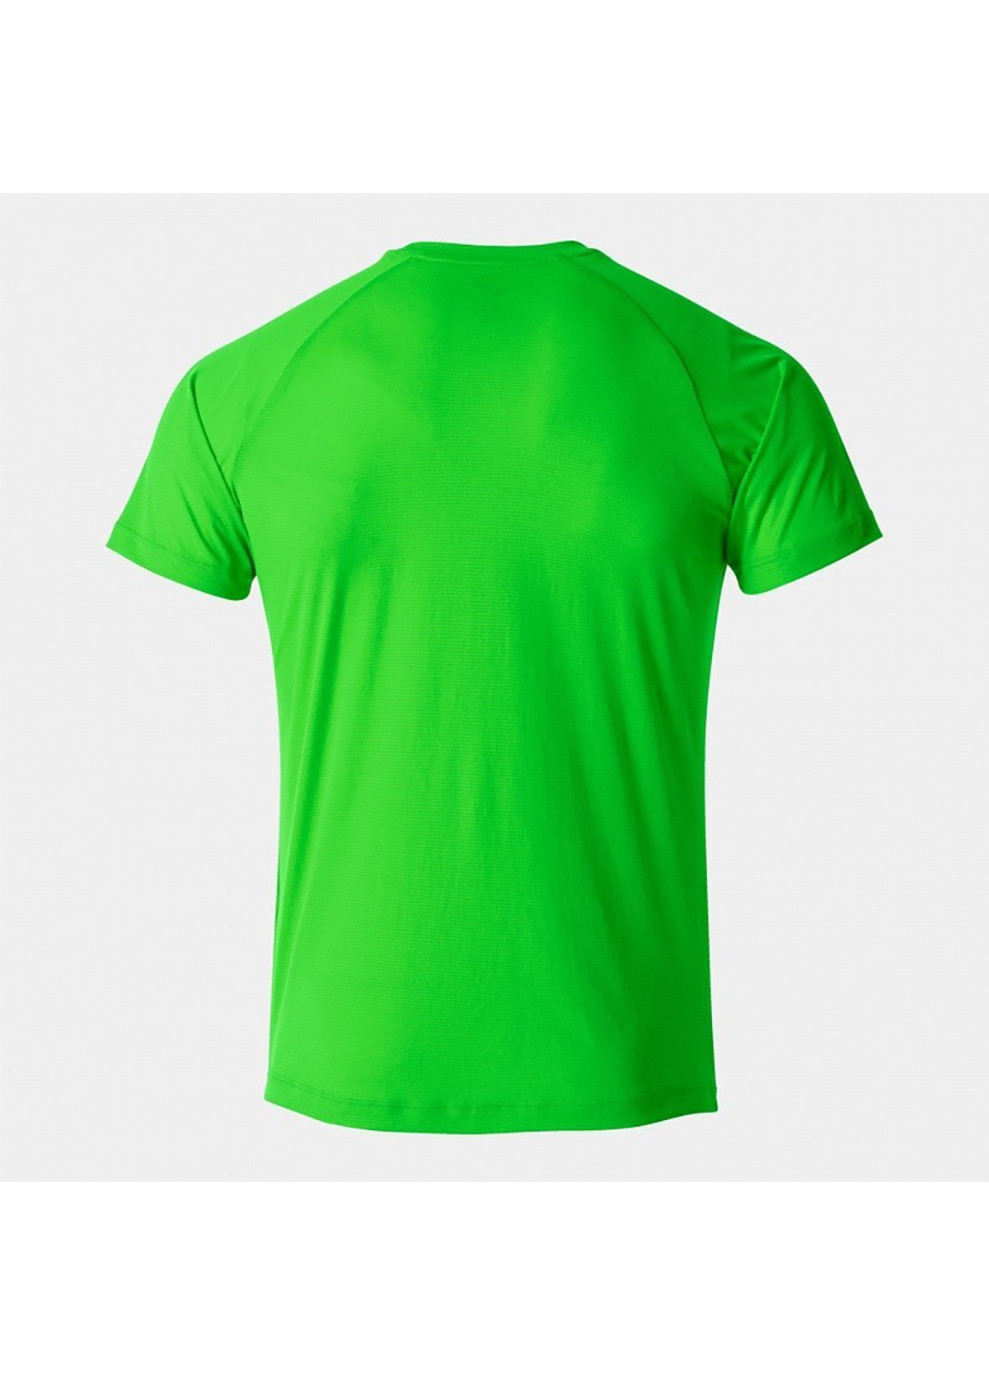 Зеленая футболка r-combi short sleeve t-shirt зеленый Joma